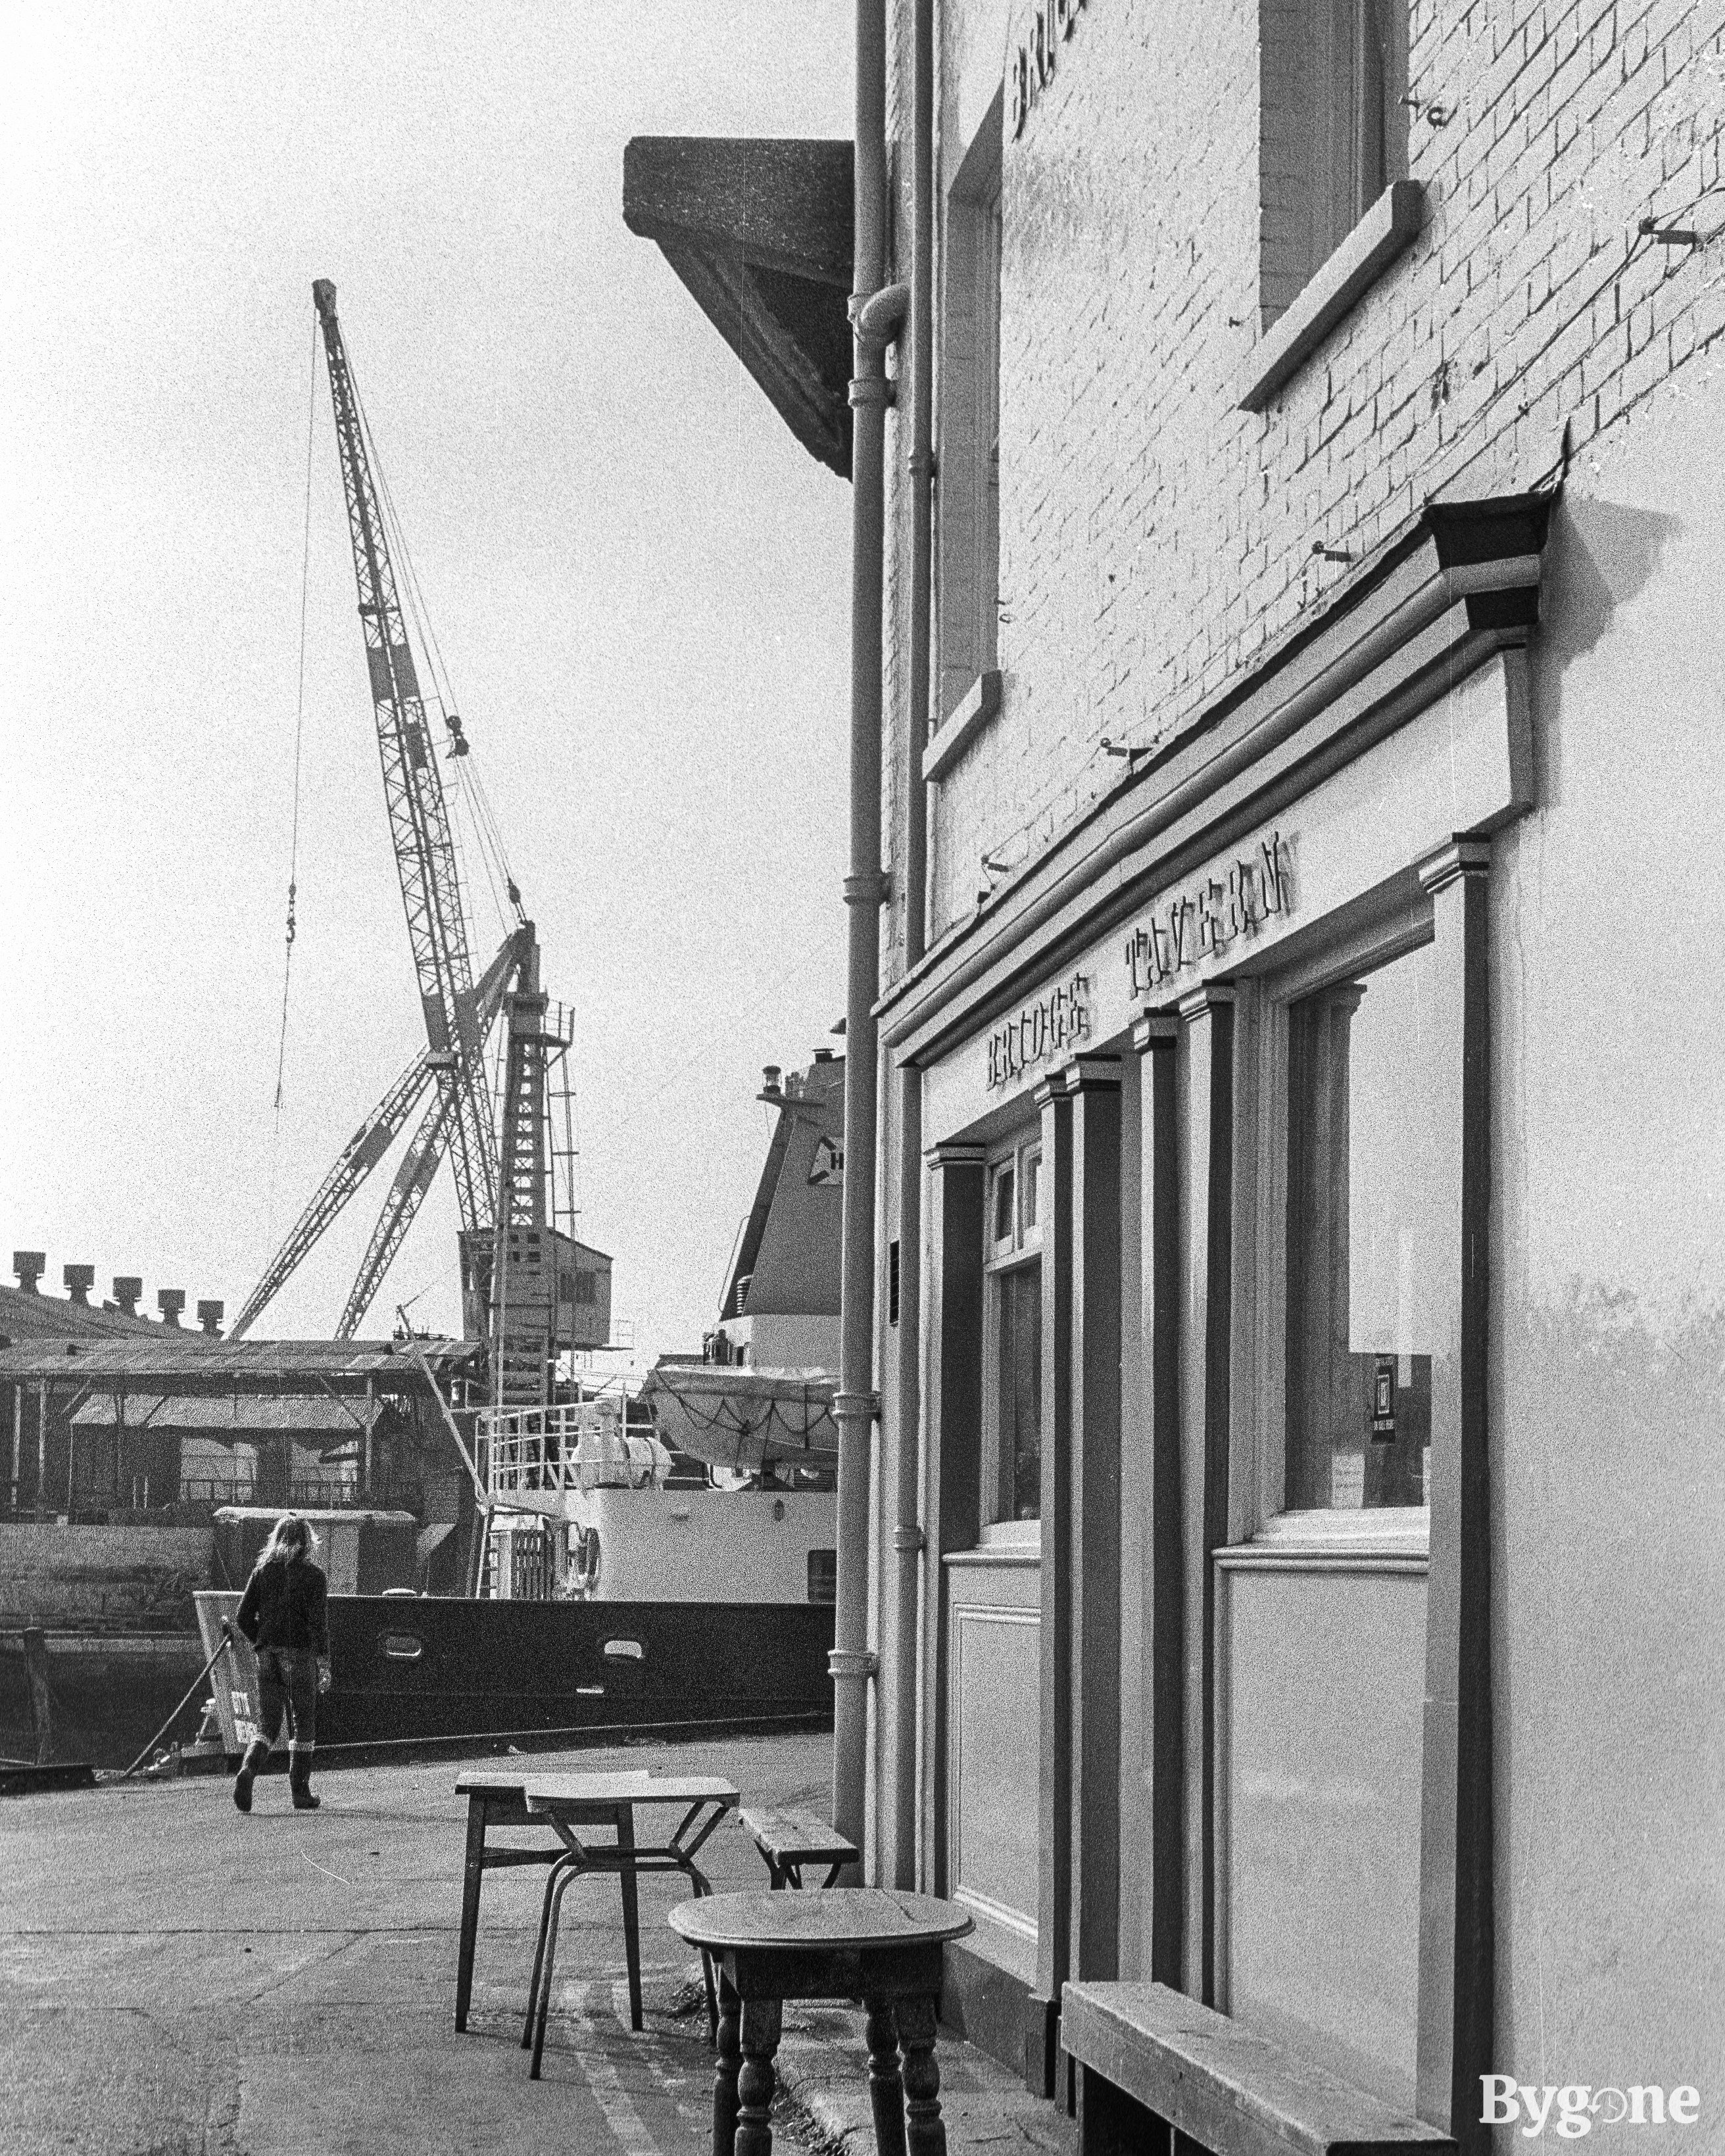 Bridge Tavern, Old Portsmouth, 1973